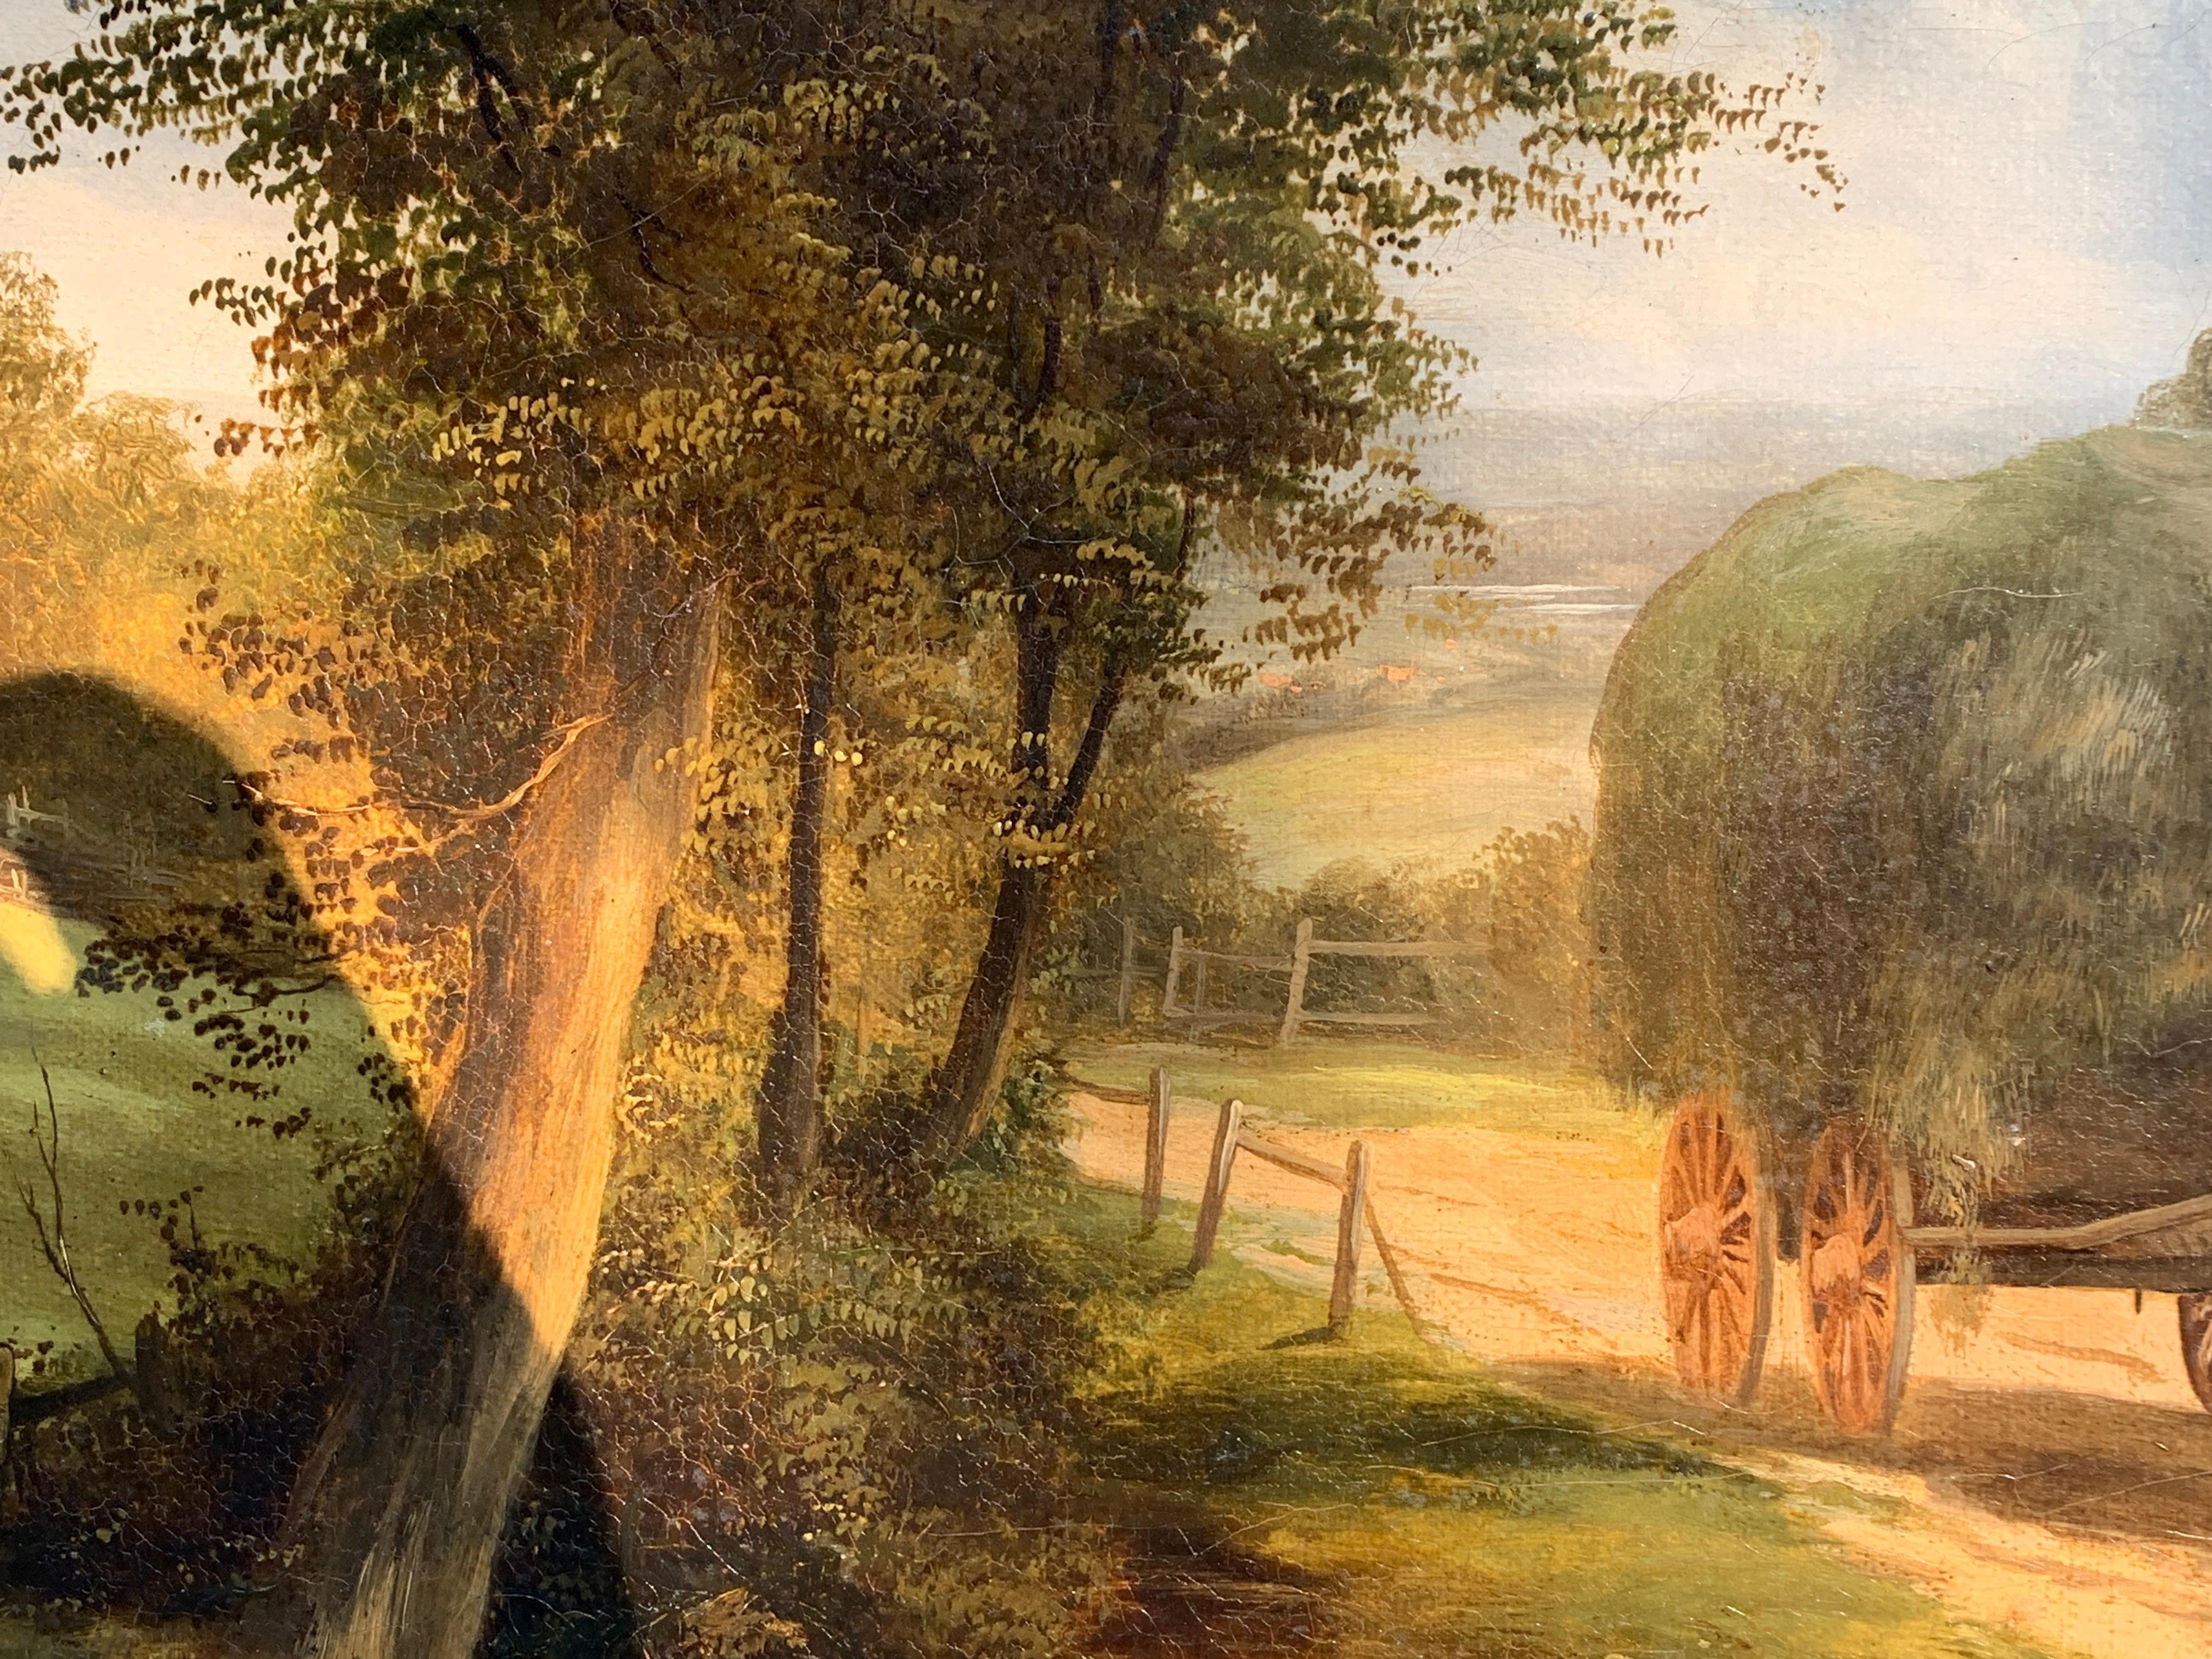 Late 19th century Antique English Village landscape, horses, people, haycart. 1